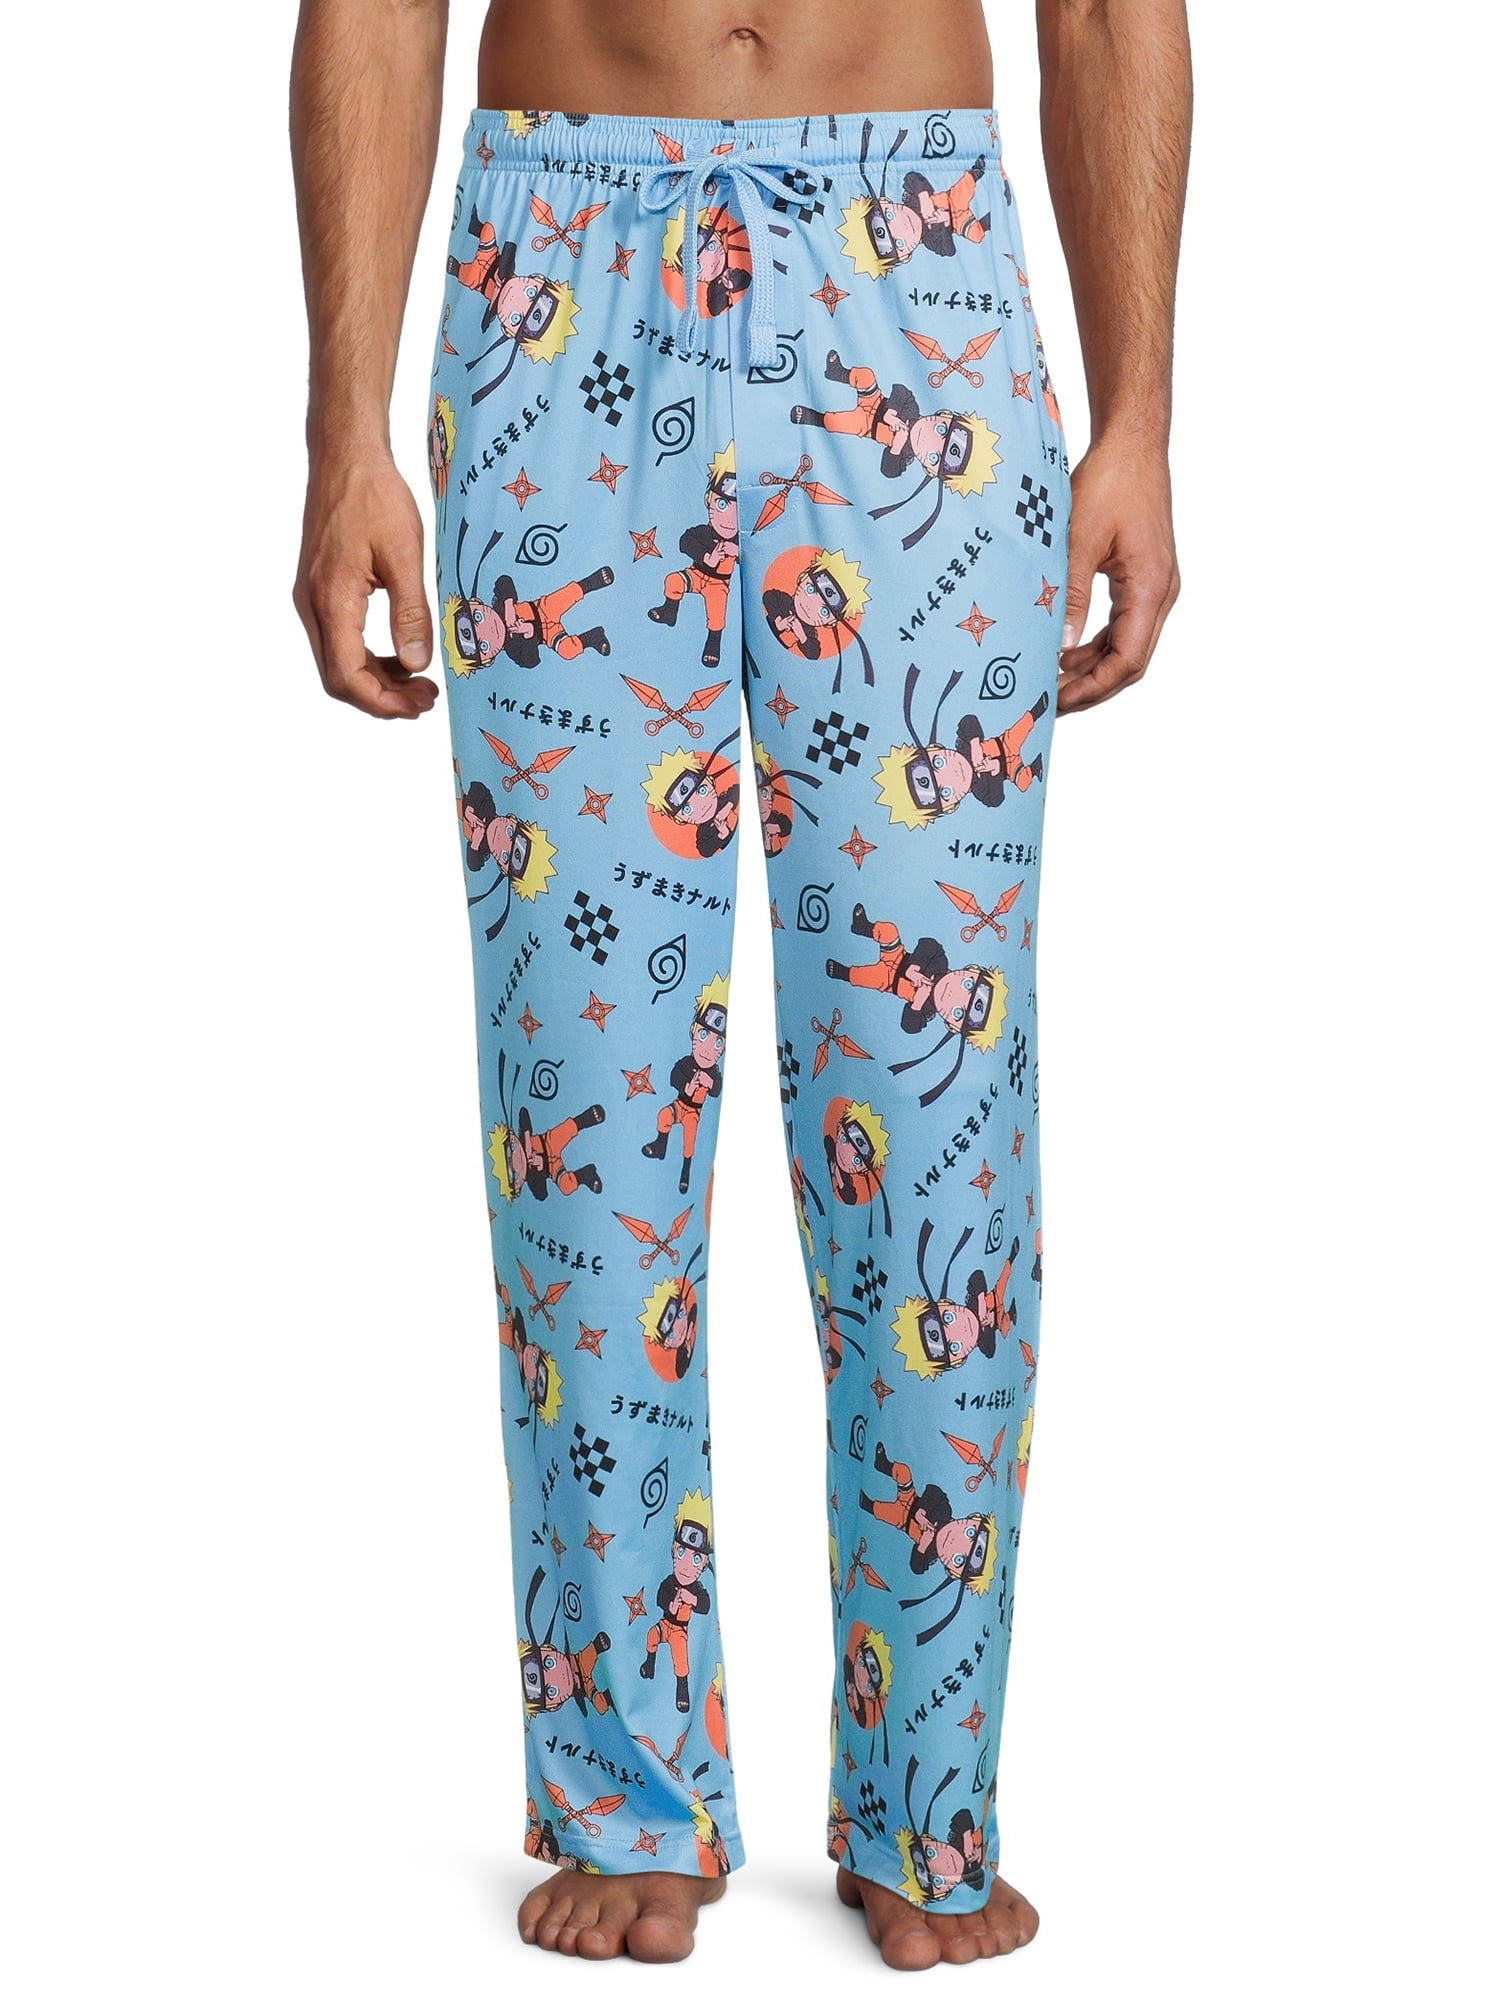 HUNTER x HUNTER Gon Mens Pajamas Pants Anime Size L  XL Lounge Sleep  Womens NEW  eBay